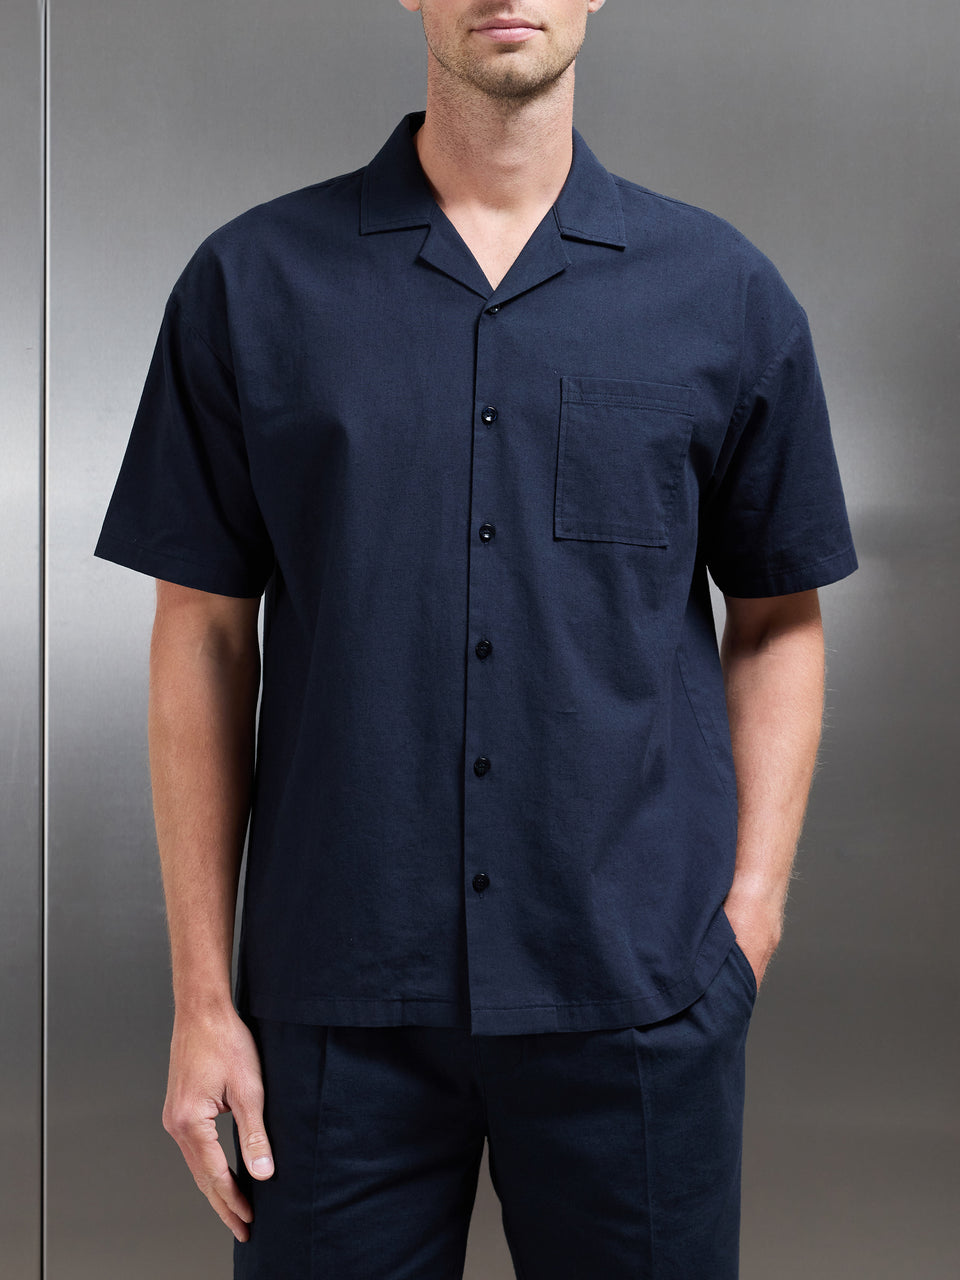 Relaxed Cotton Linen Revere Collar Shirt in Navy